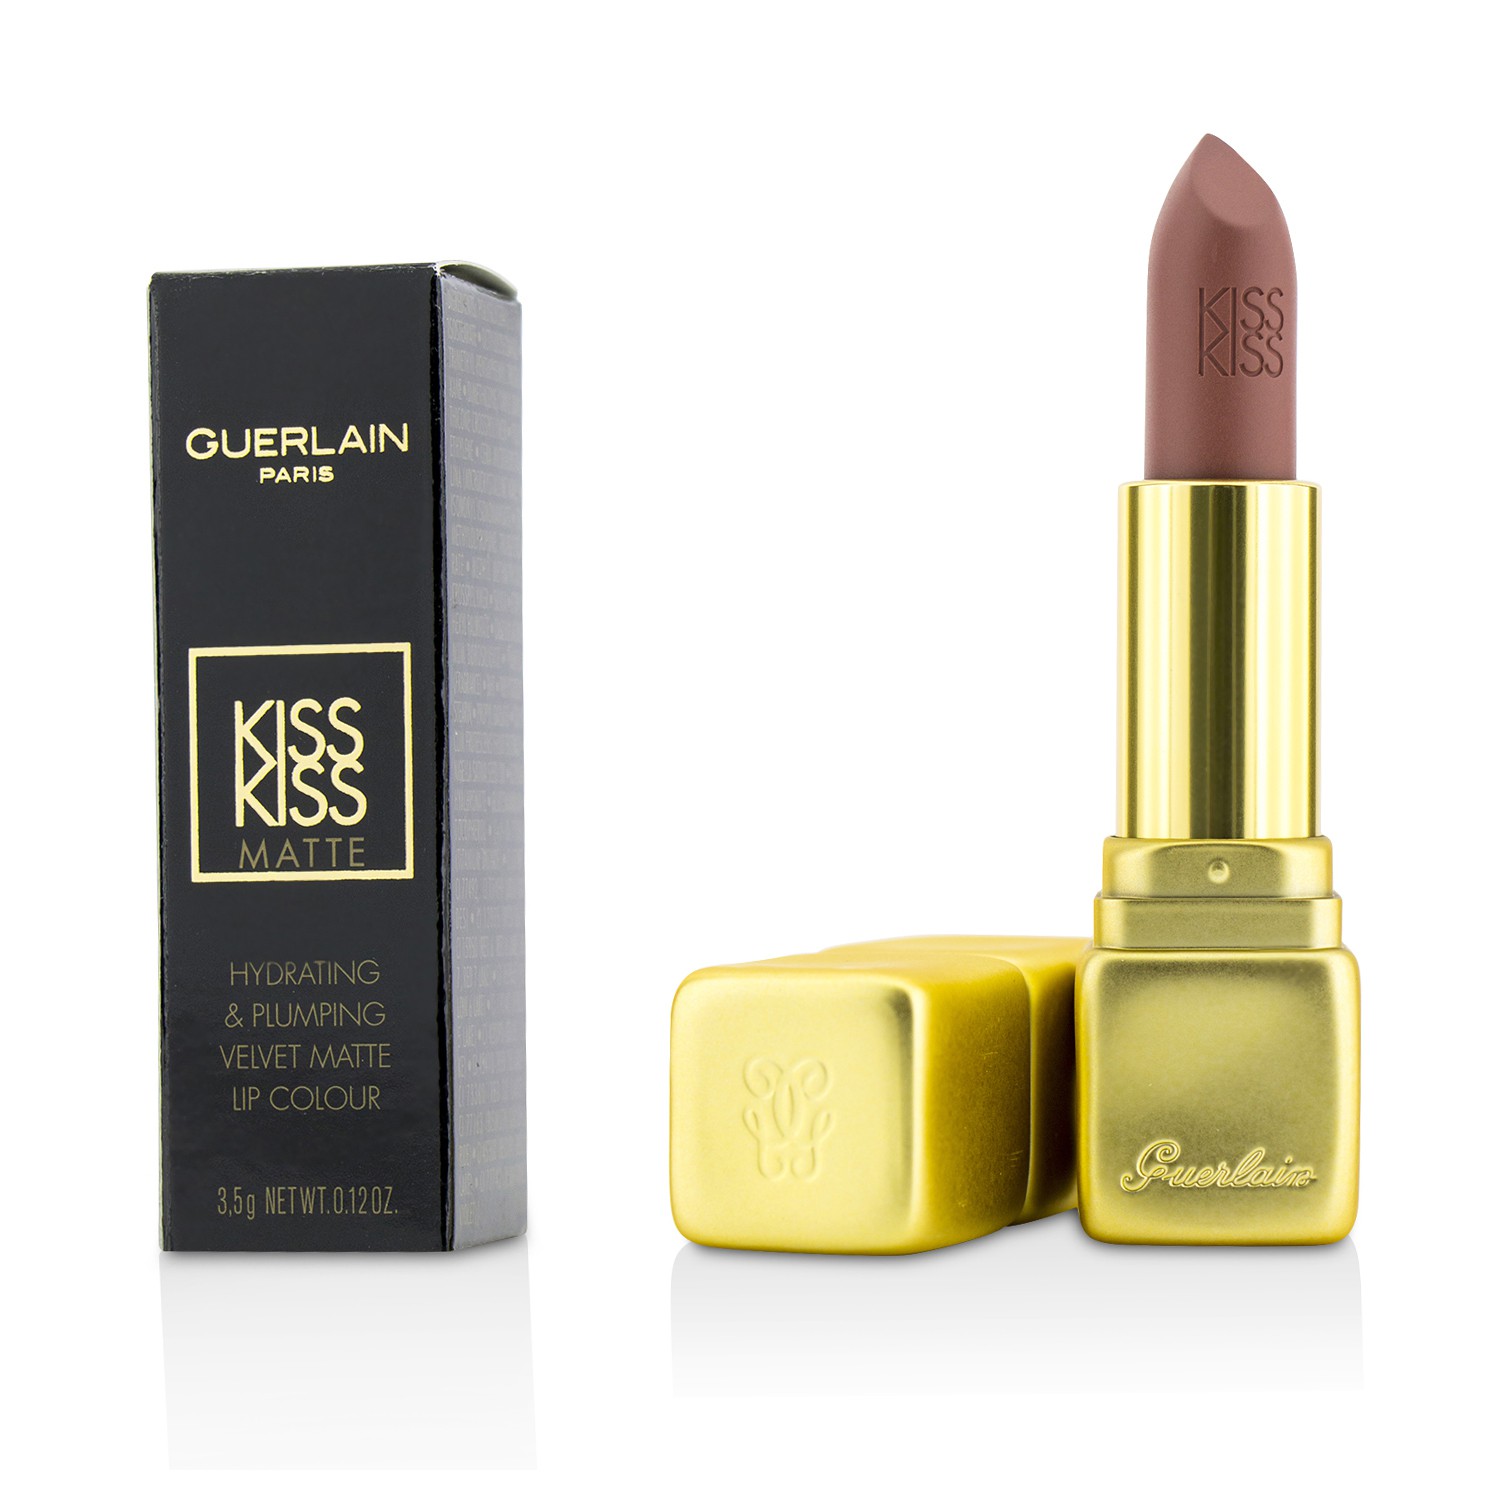 KissKiss Matte Hydrating Matte Lip Colour - # M306 Caliente Beige Guerlain Image